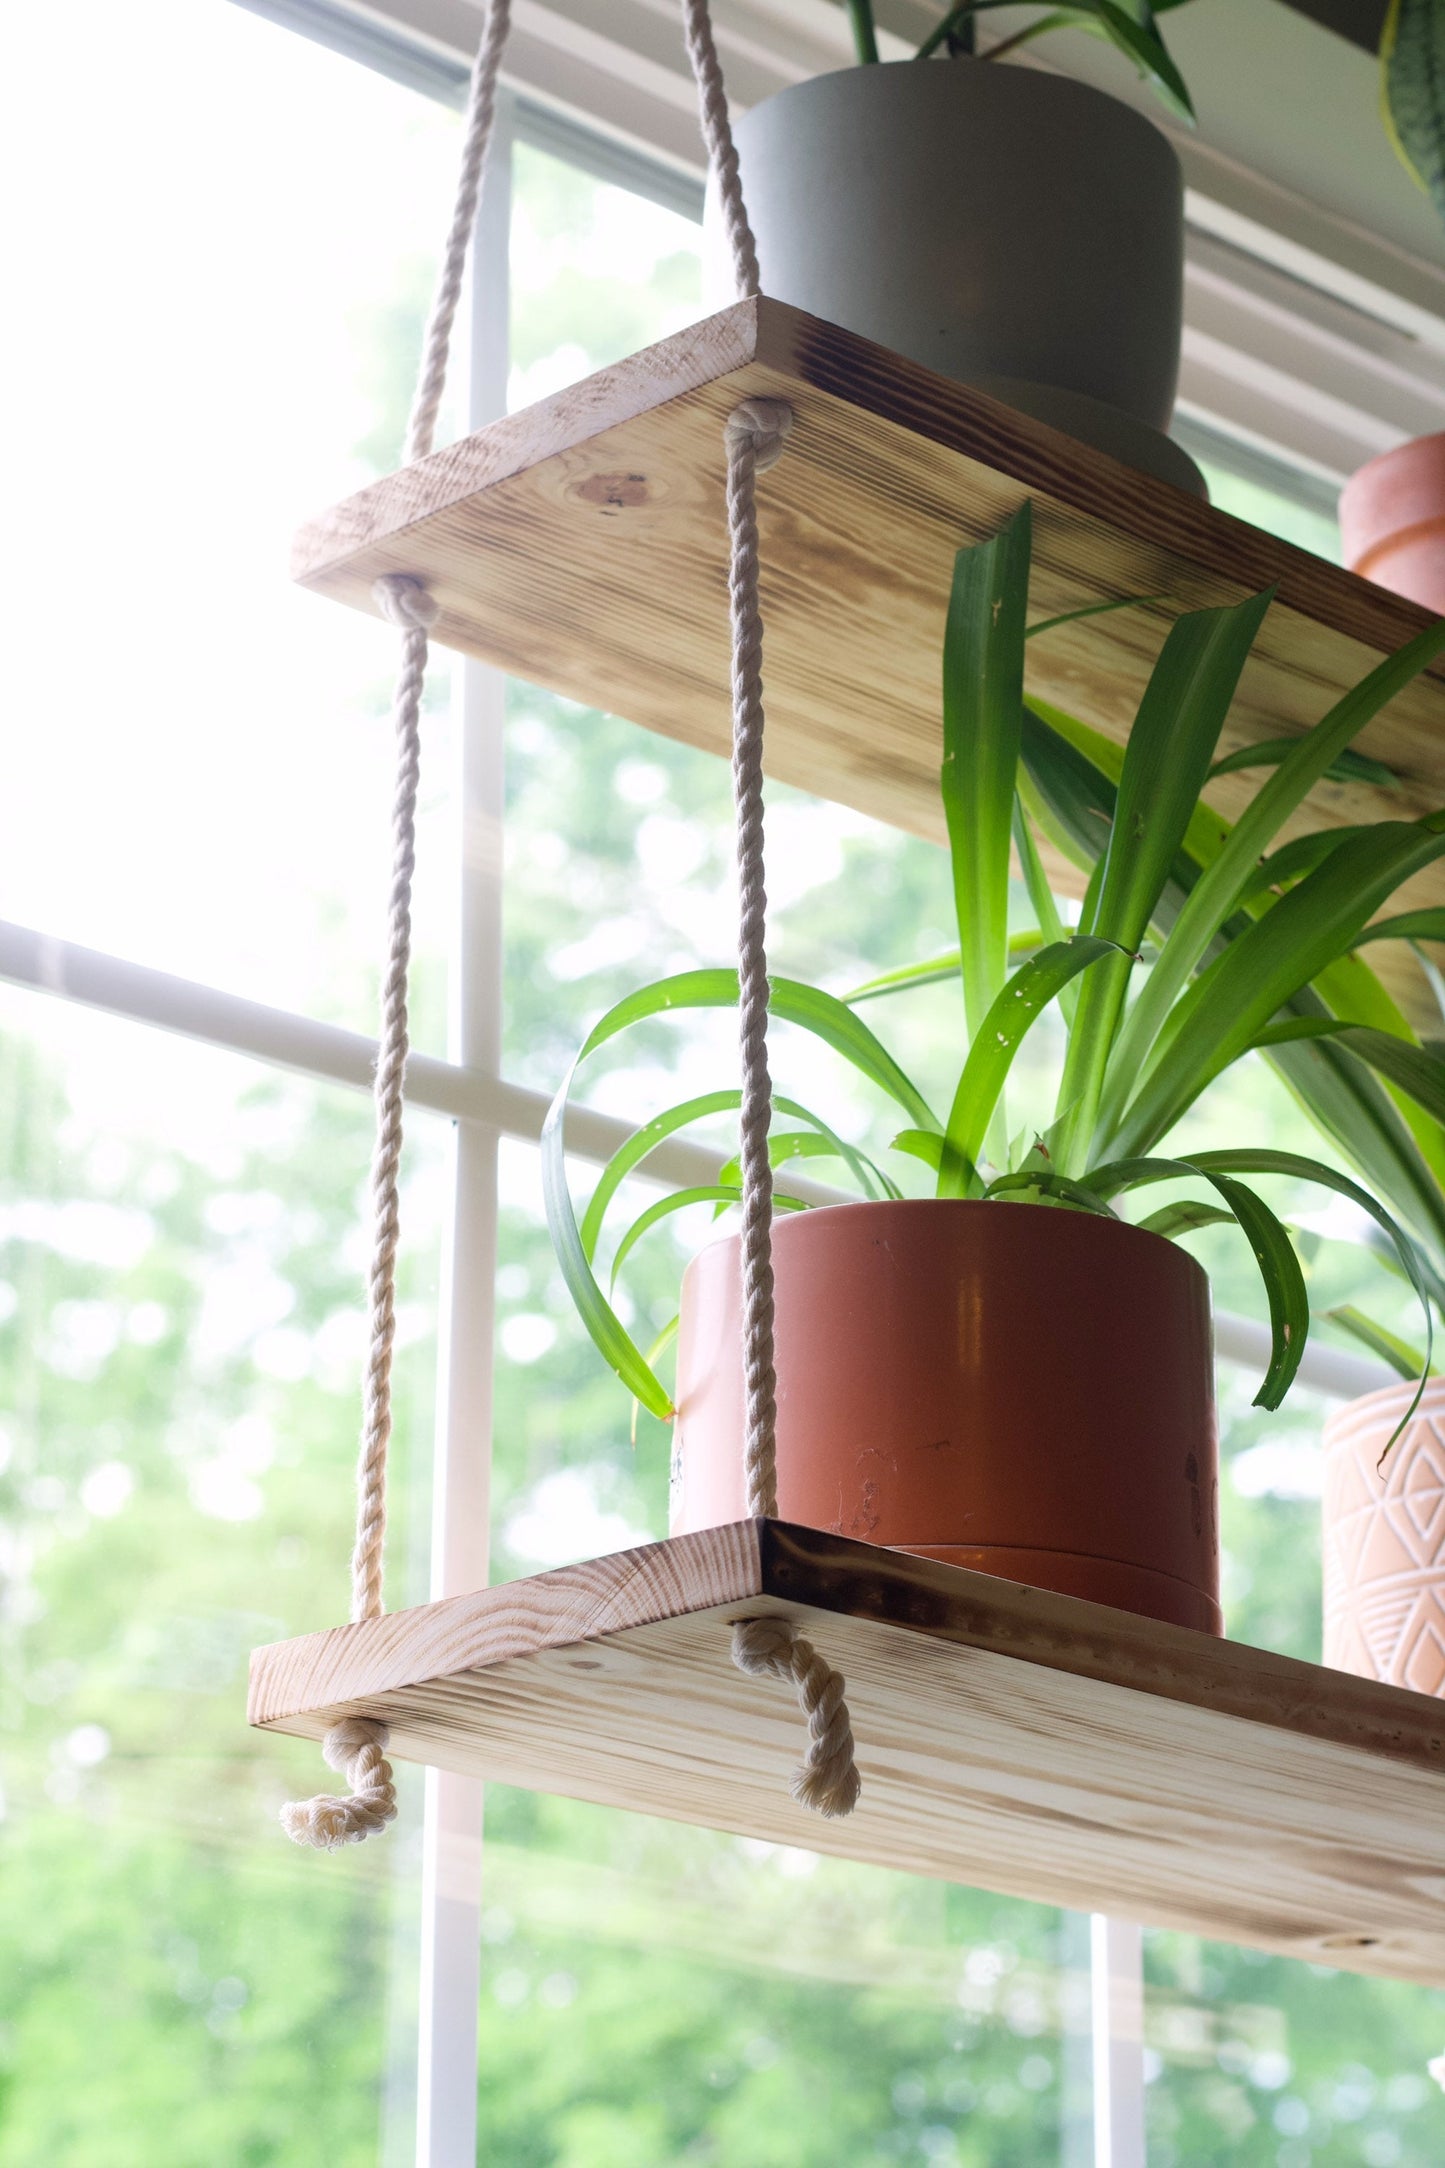 Plants flourishing on our 2-tiered window plant shelf